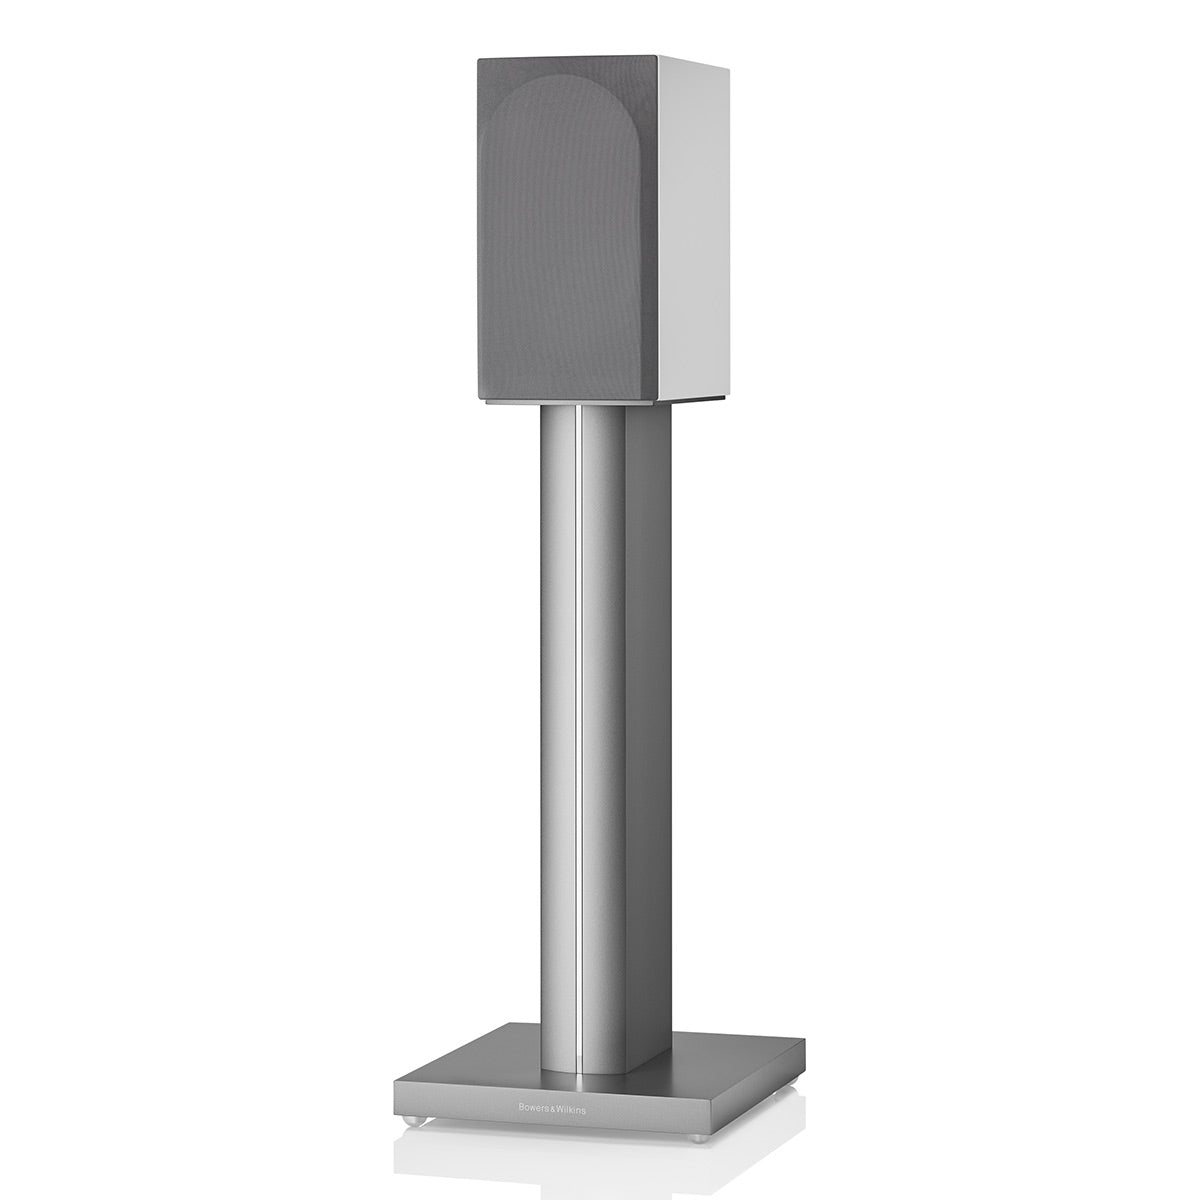 Bowers & Wilkins FS-700 Floor Stand for S3 700 Series Bookshelf Speaker - Pair (Silver)